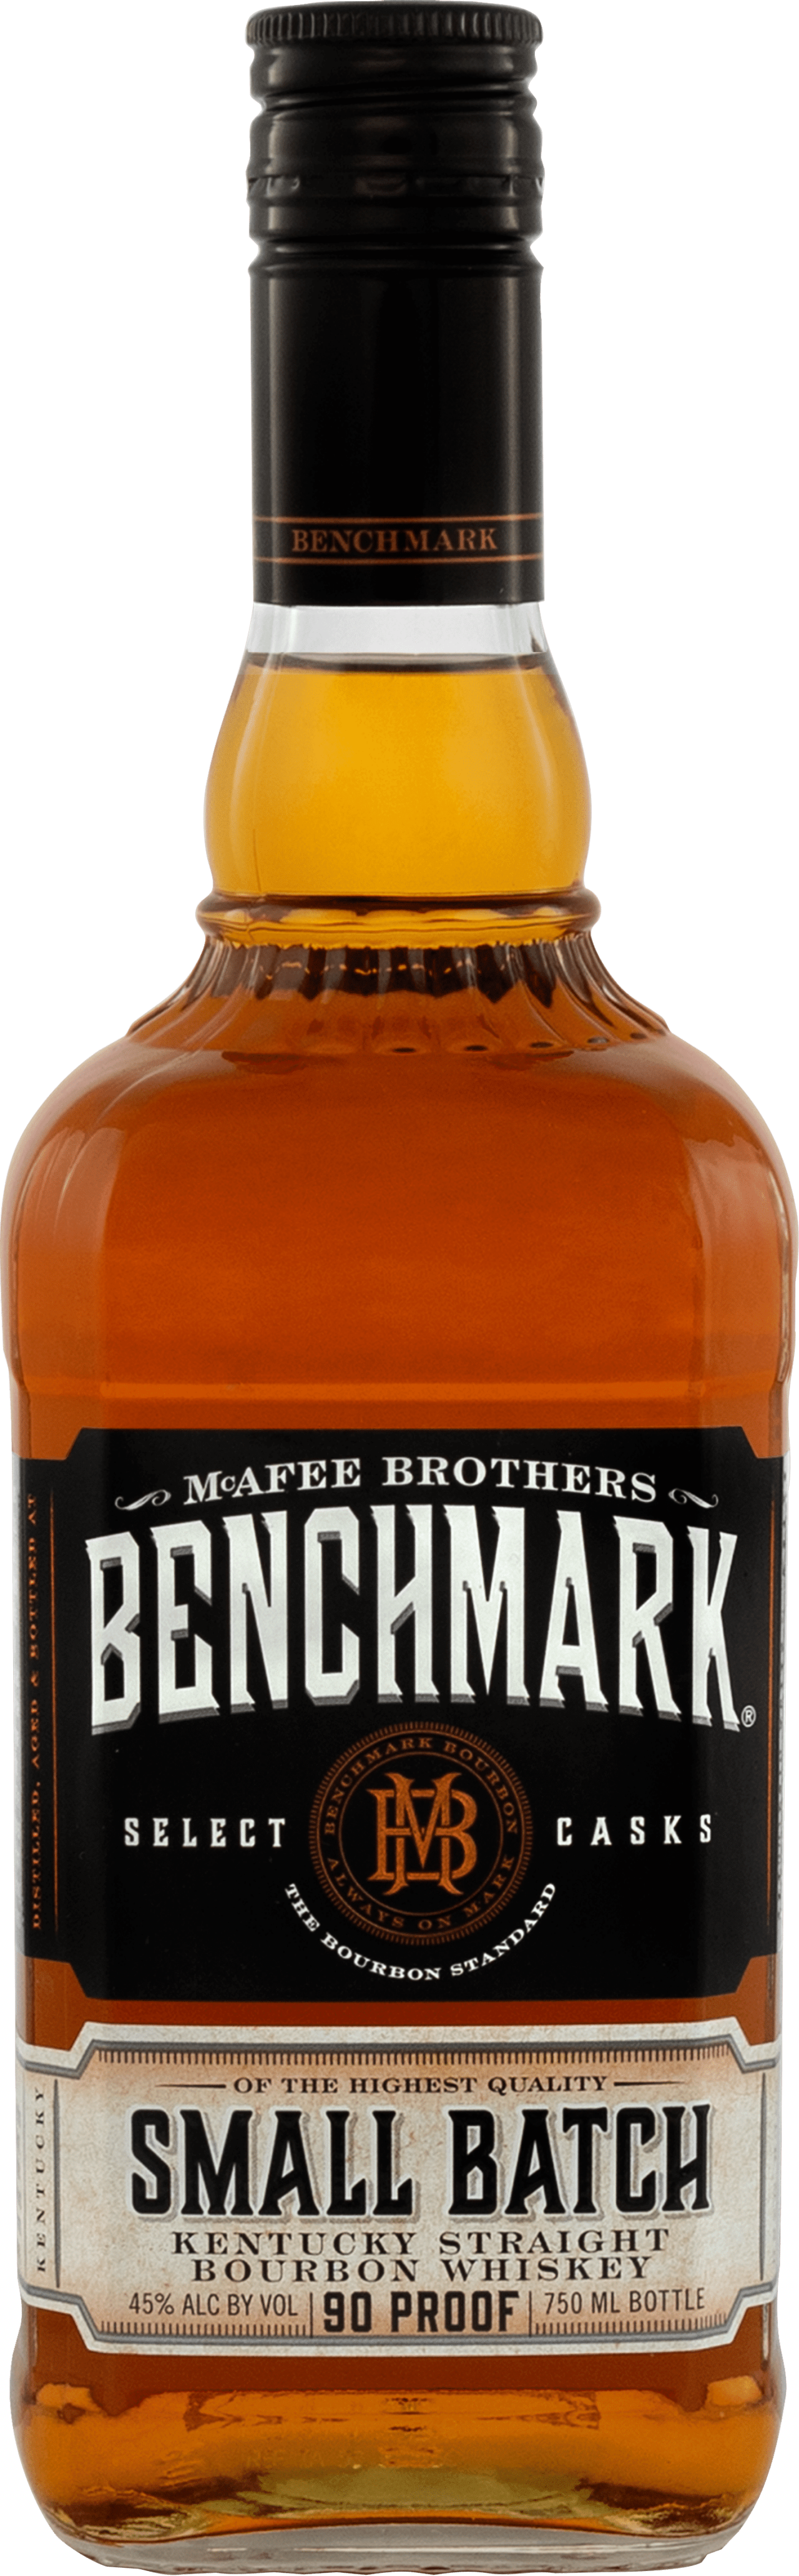 Benchmark Small Batch Kentucky Straight Bourbon Whiskey bottle